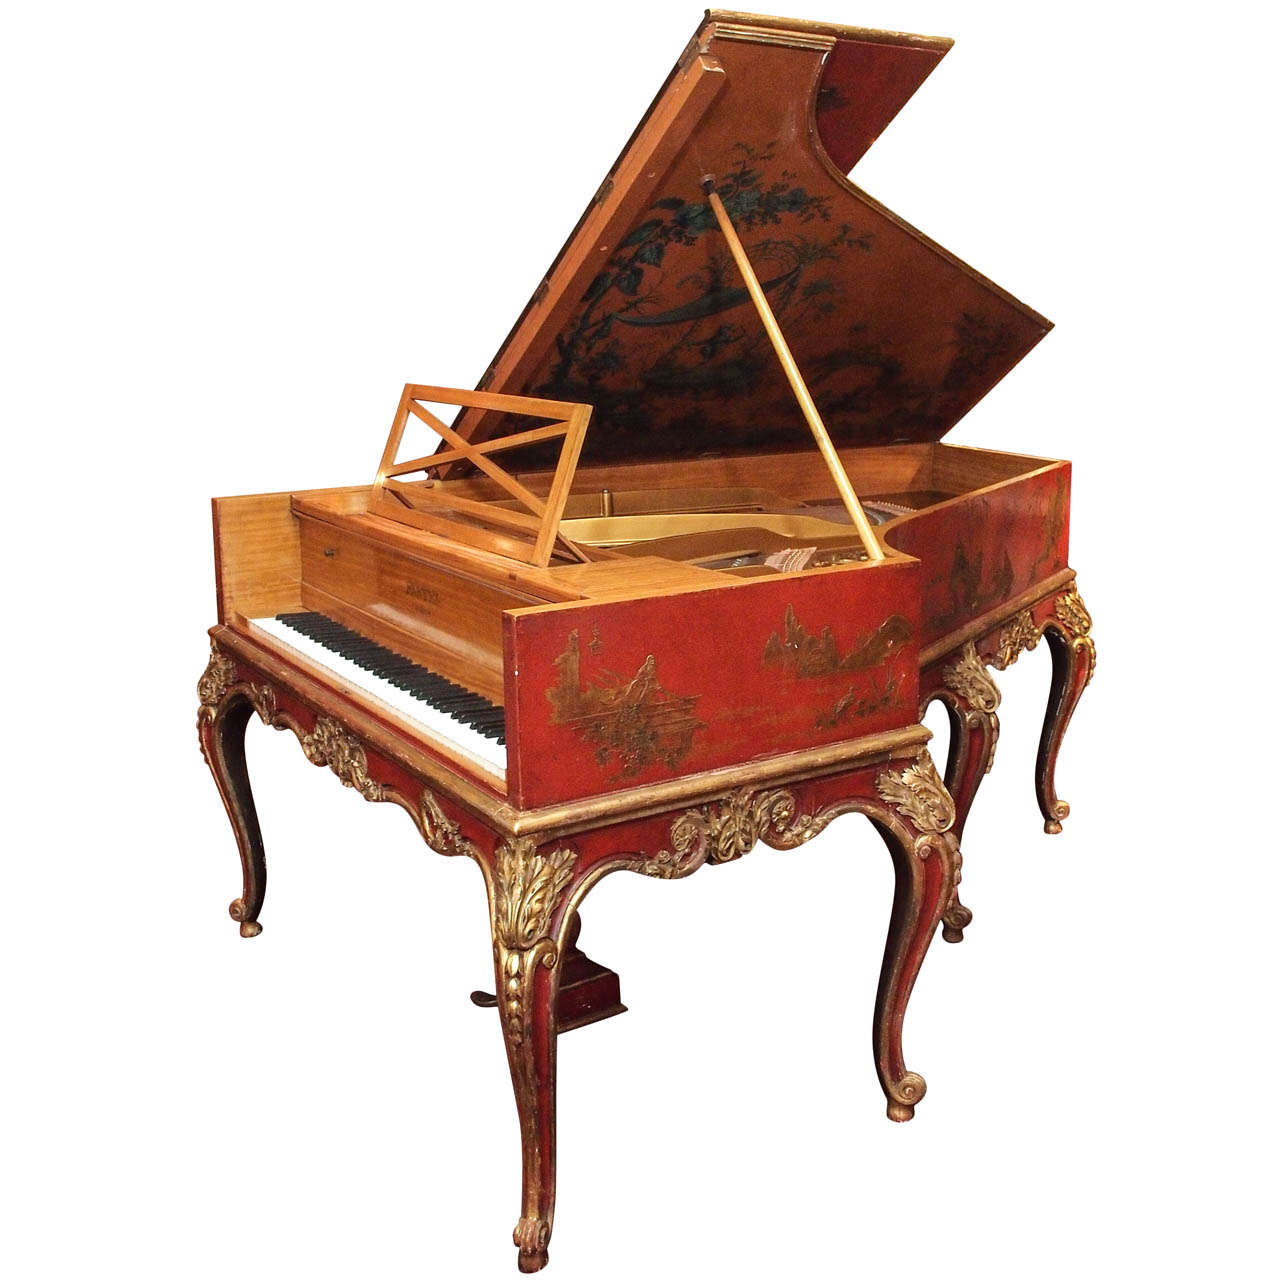 Pleyel Piano - 2 For Sale on 1stDibs | pleyel piano for sale, pleyel piano  price, pleyel grand piano